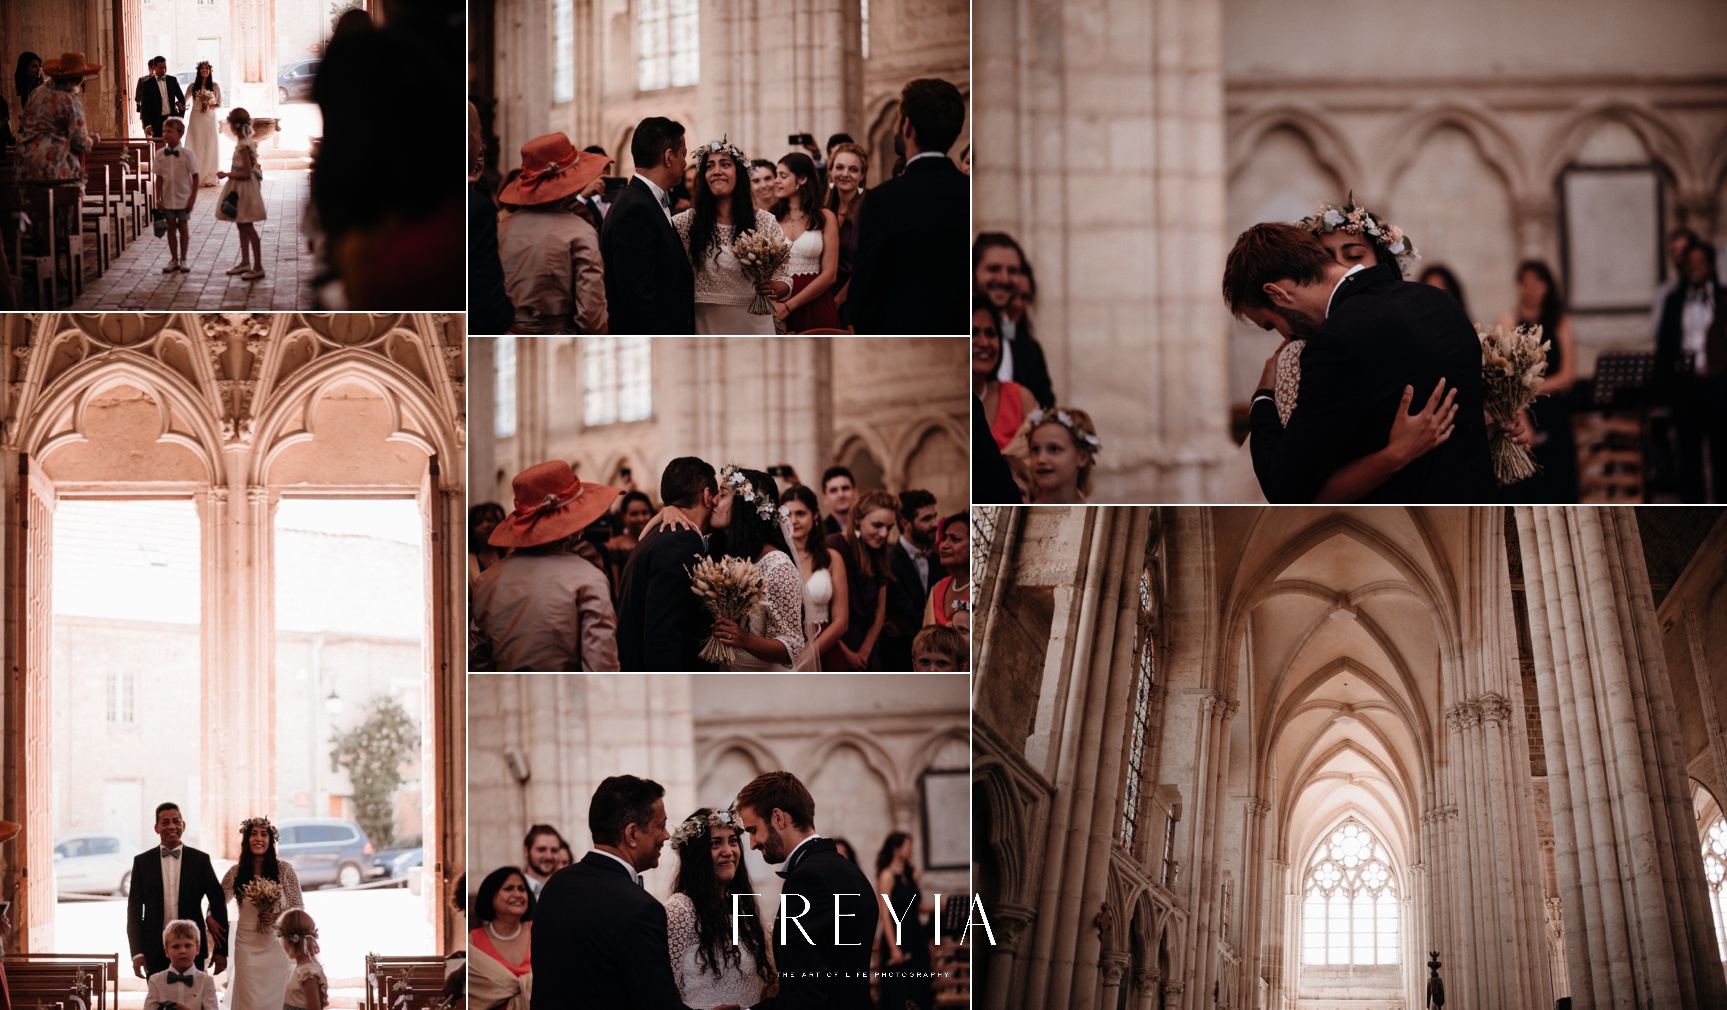 R + T |  mariage reportage alternatif moody intime minimaliste vintage naturel boho boheme |  PHOTOGRAPHE mariage PARIS france destination  | FREYIA photography_-140.jpg (Copy)